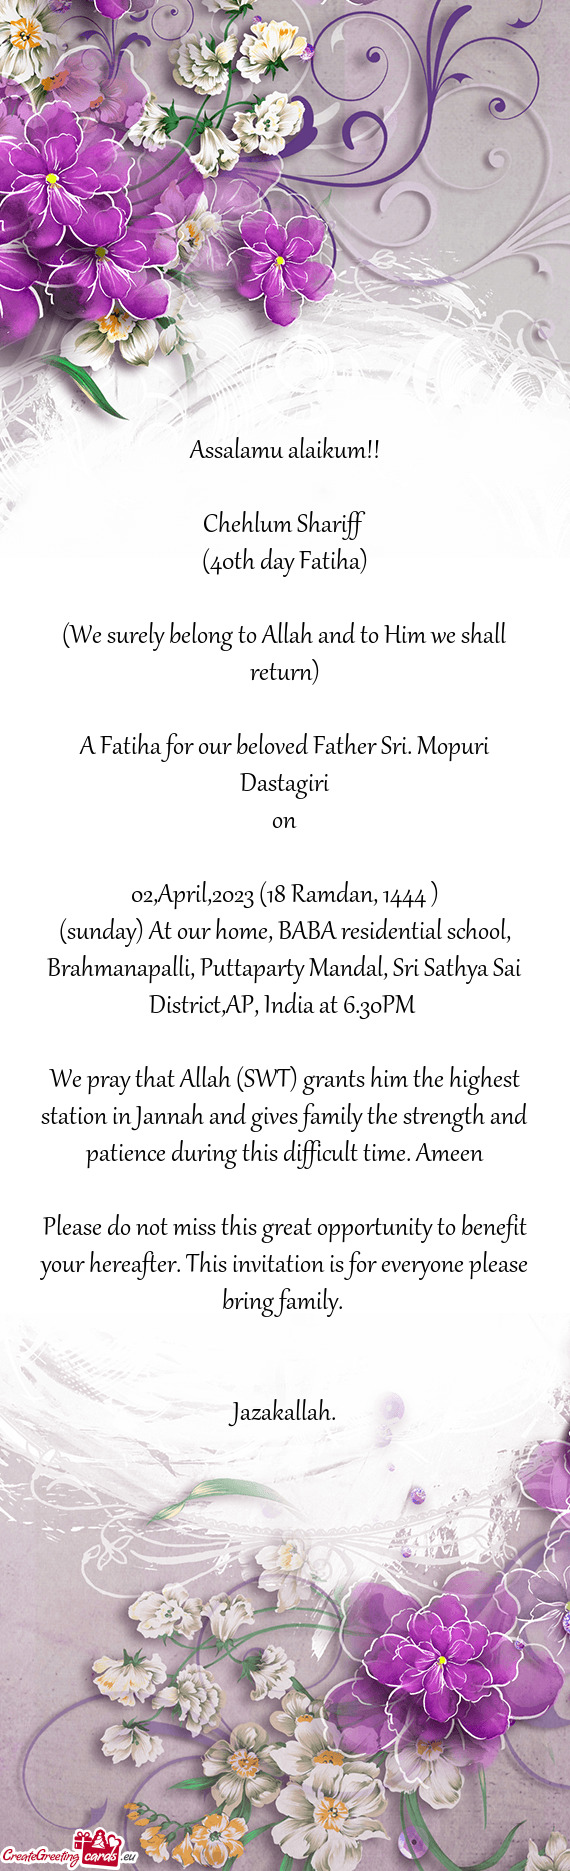 A Fatiha for our beloved Father Sri. Mopuri Dastagiri